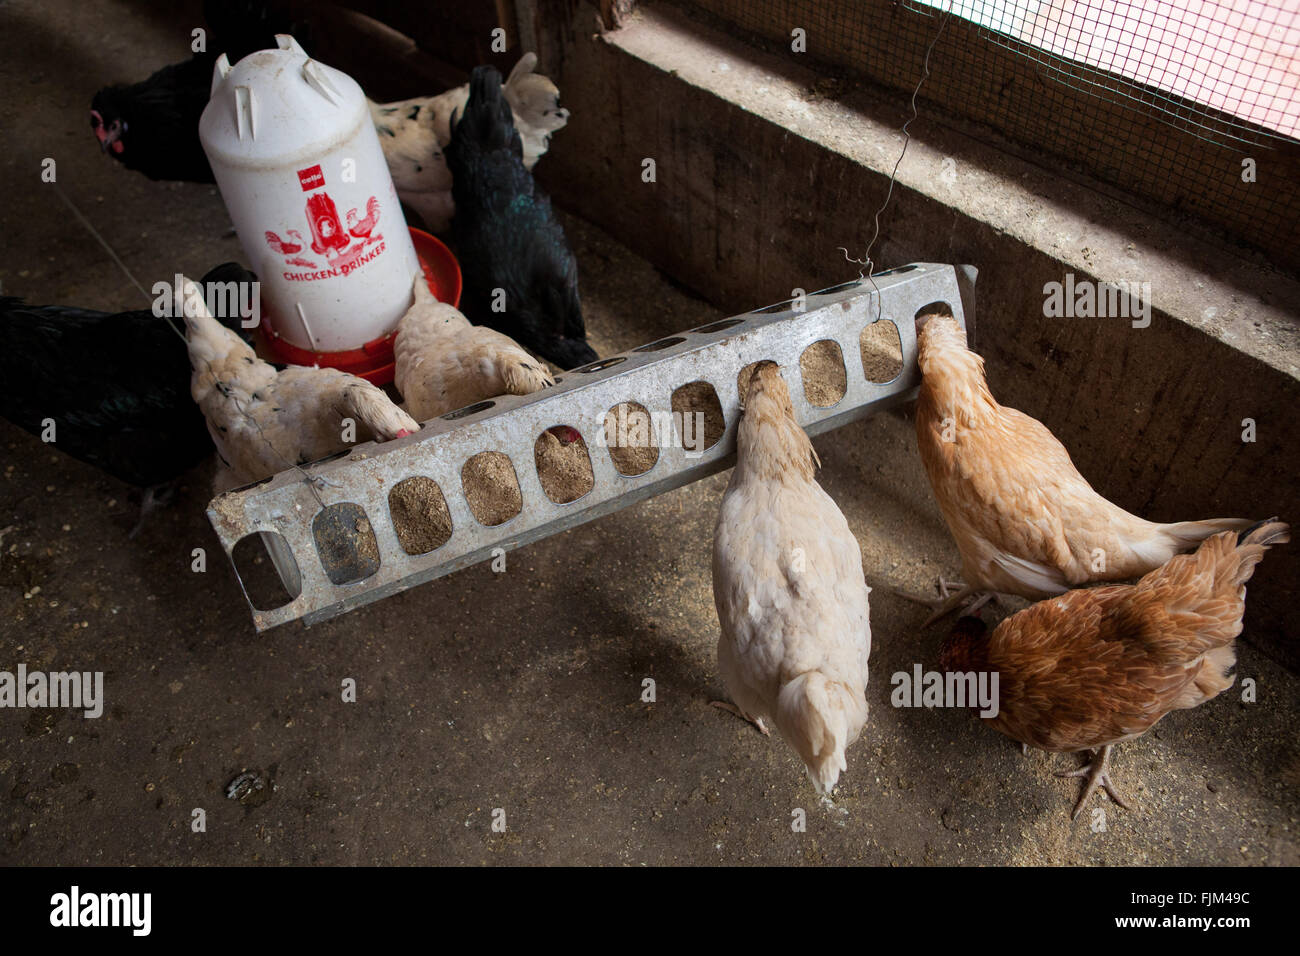 Farmer feeding his chickens on a farm in Lenawee County Michigan MR Stock  Photo - Alamy